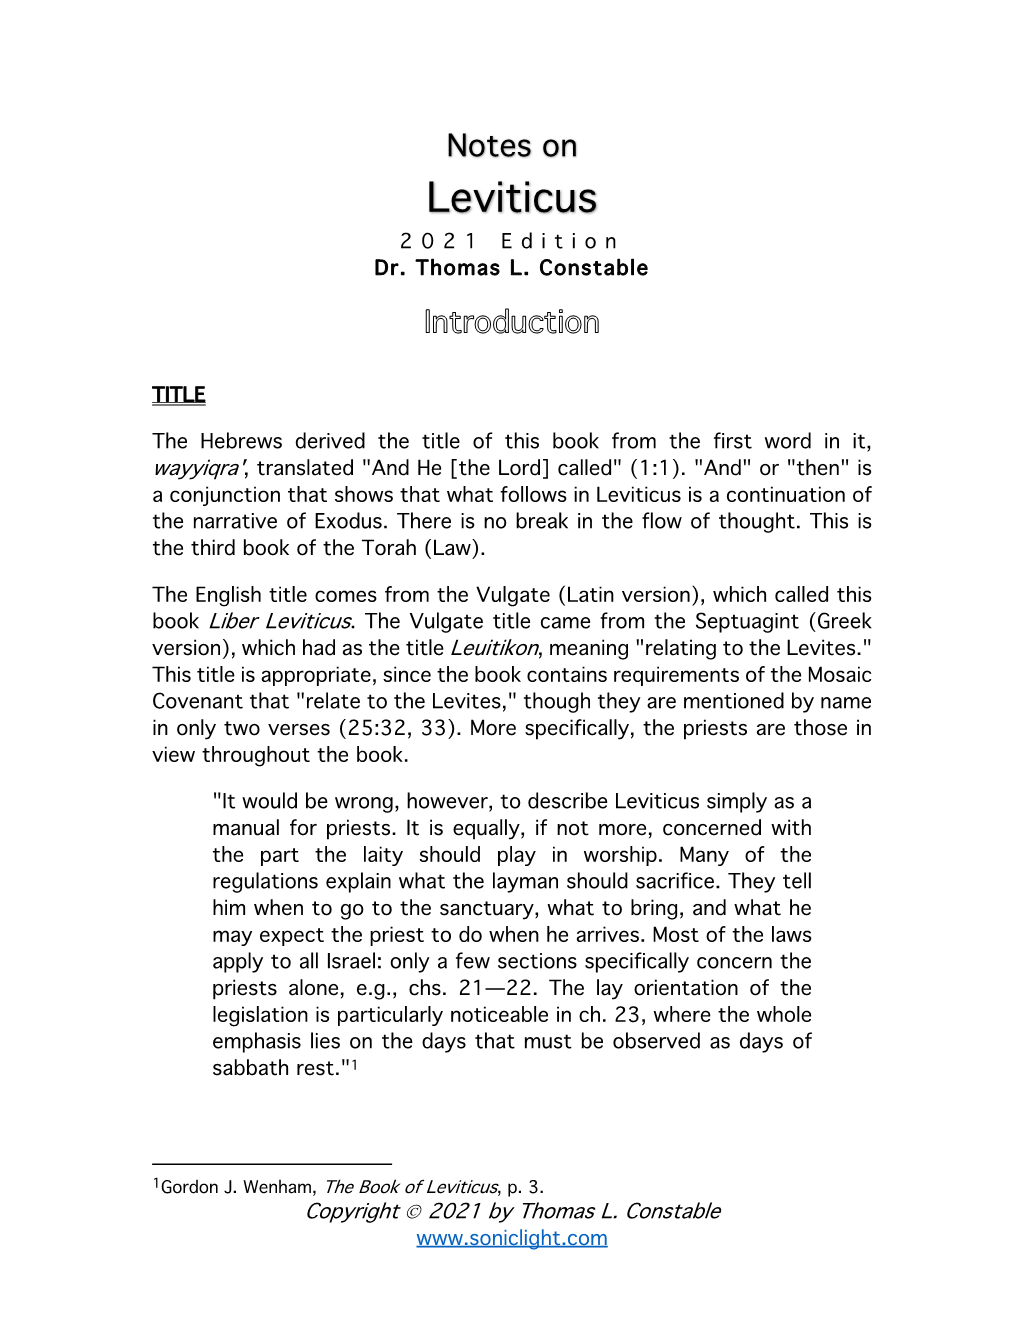 Leviticus 202 1 Edition Dr